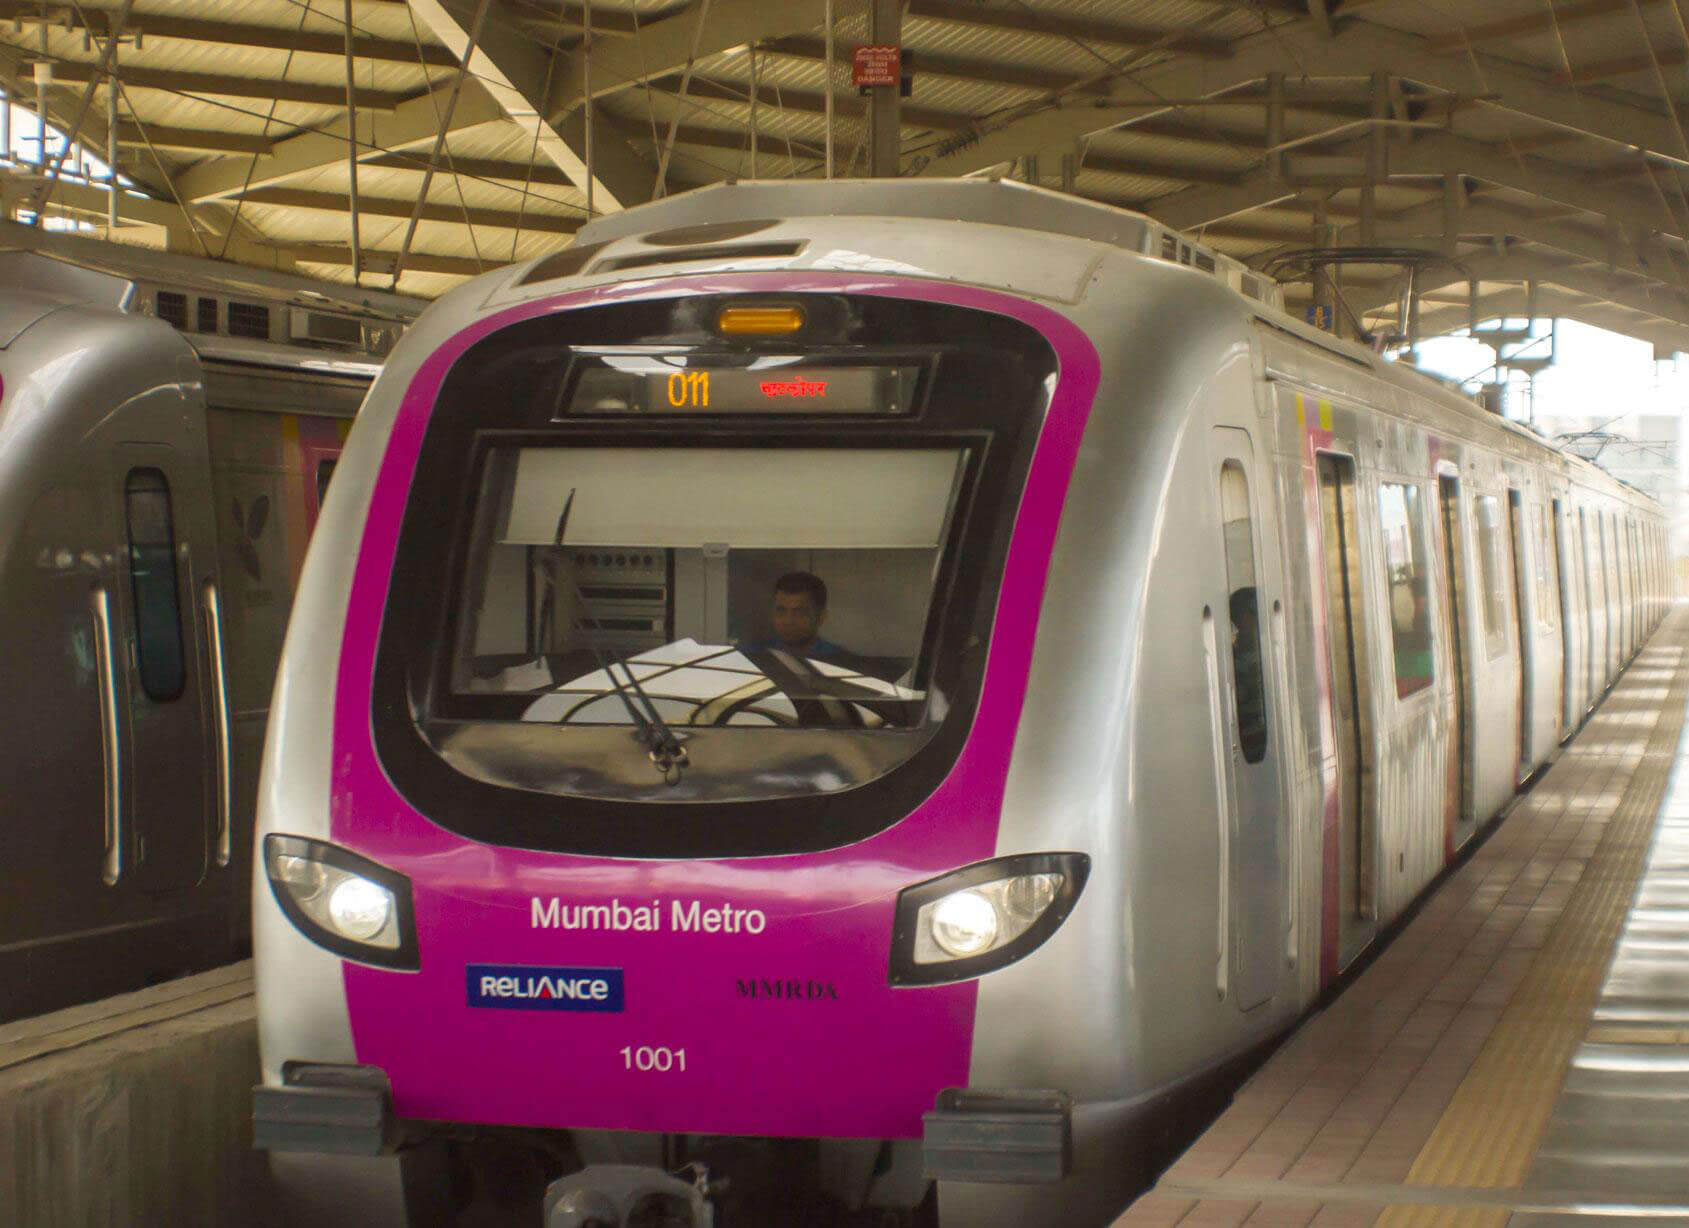 What Is Common Between Taiwan Tourism Bureau And Mumbai Metro